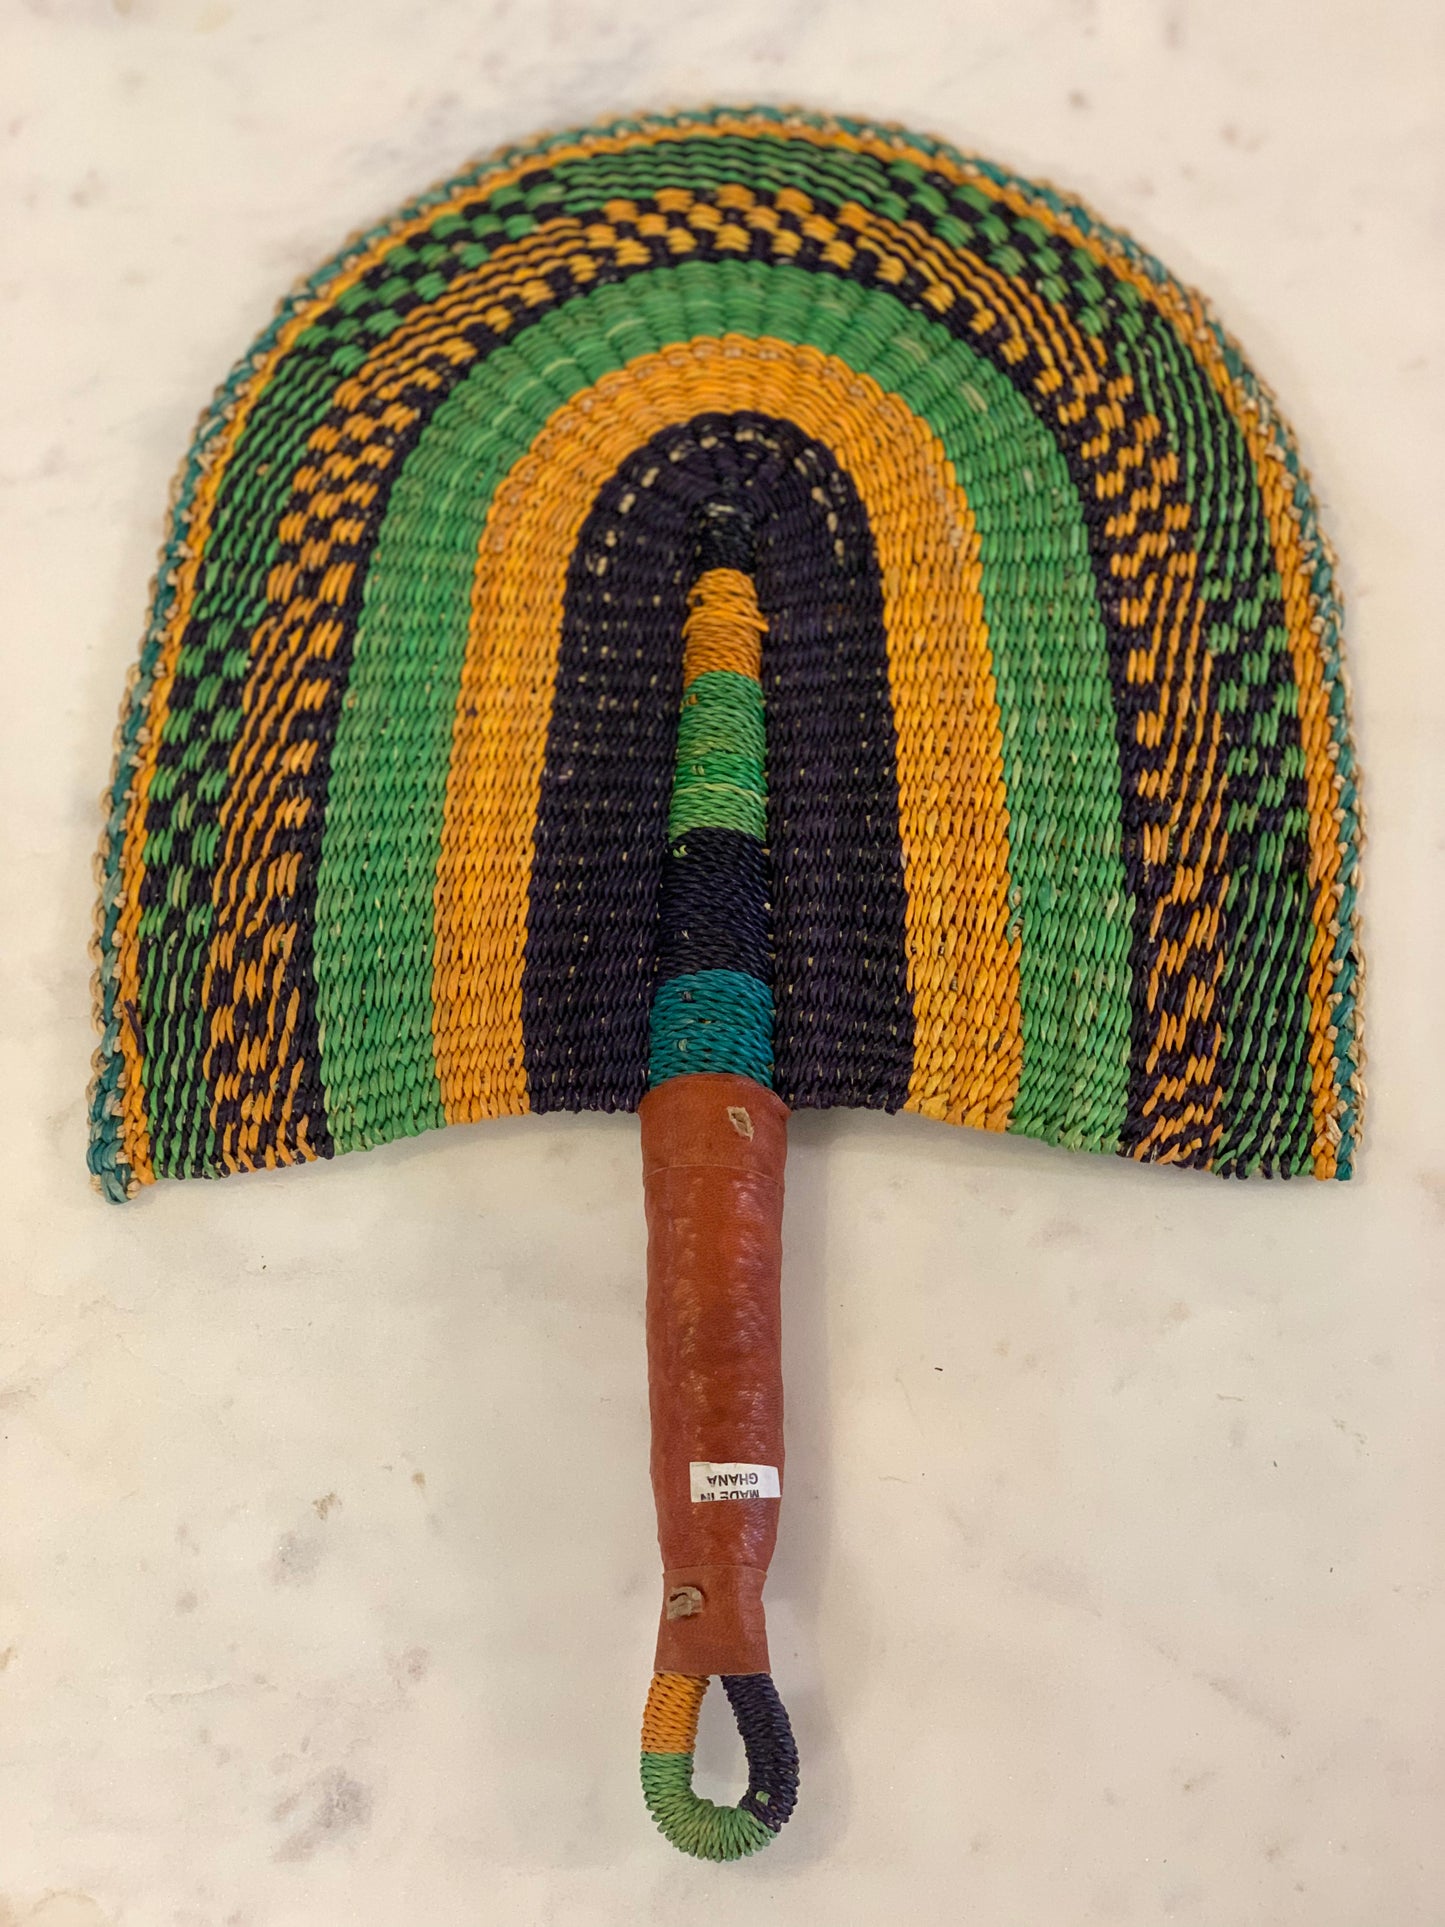 Decorative African Fan